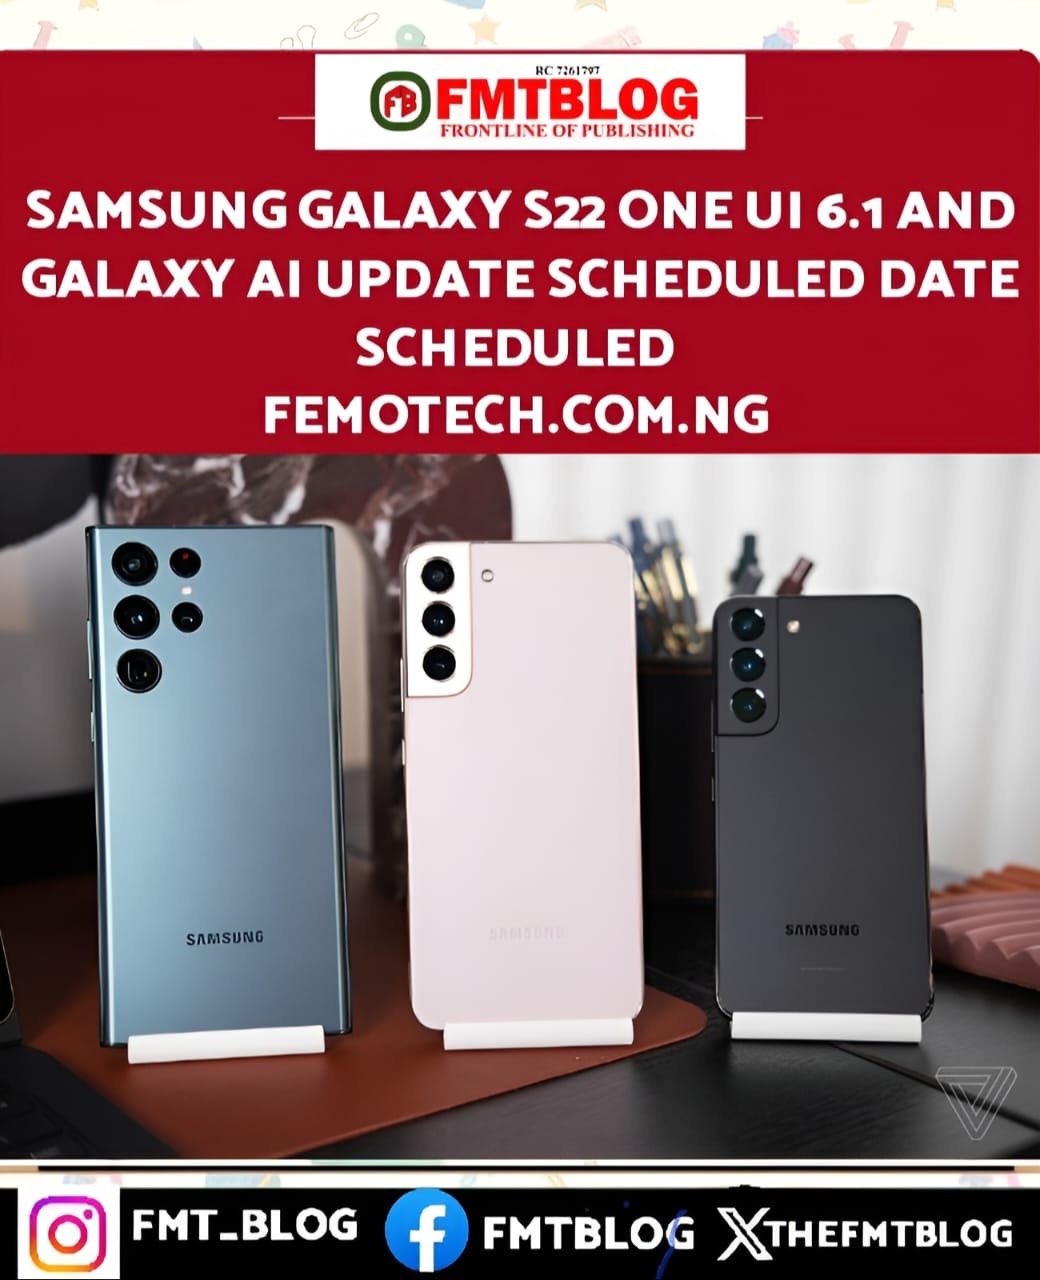 Samsung Galaxy S22 ONE UI 6.1 And Galaxy AI Update Scheduled Date Revealed